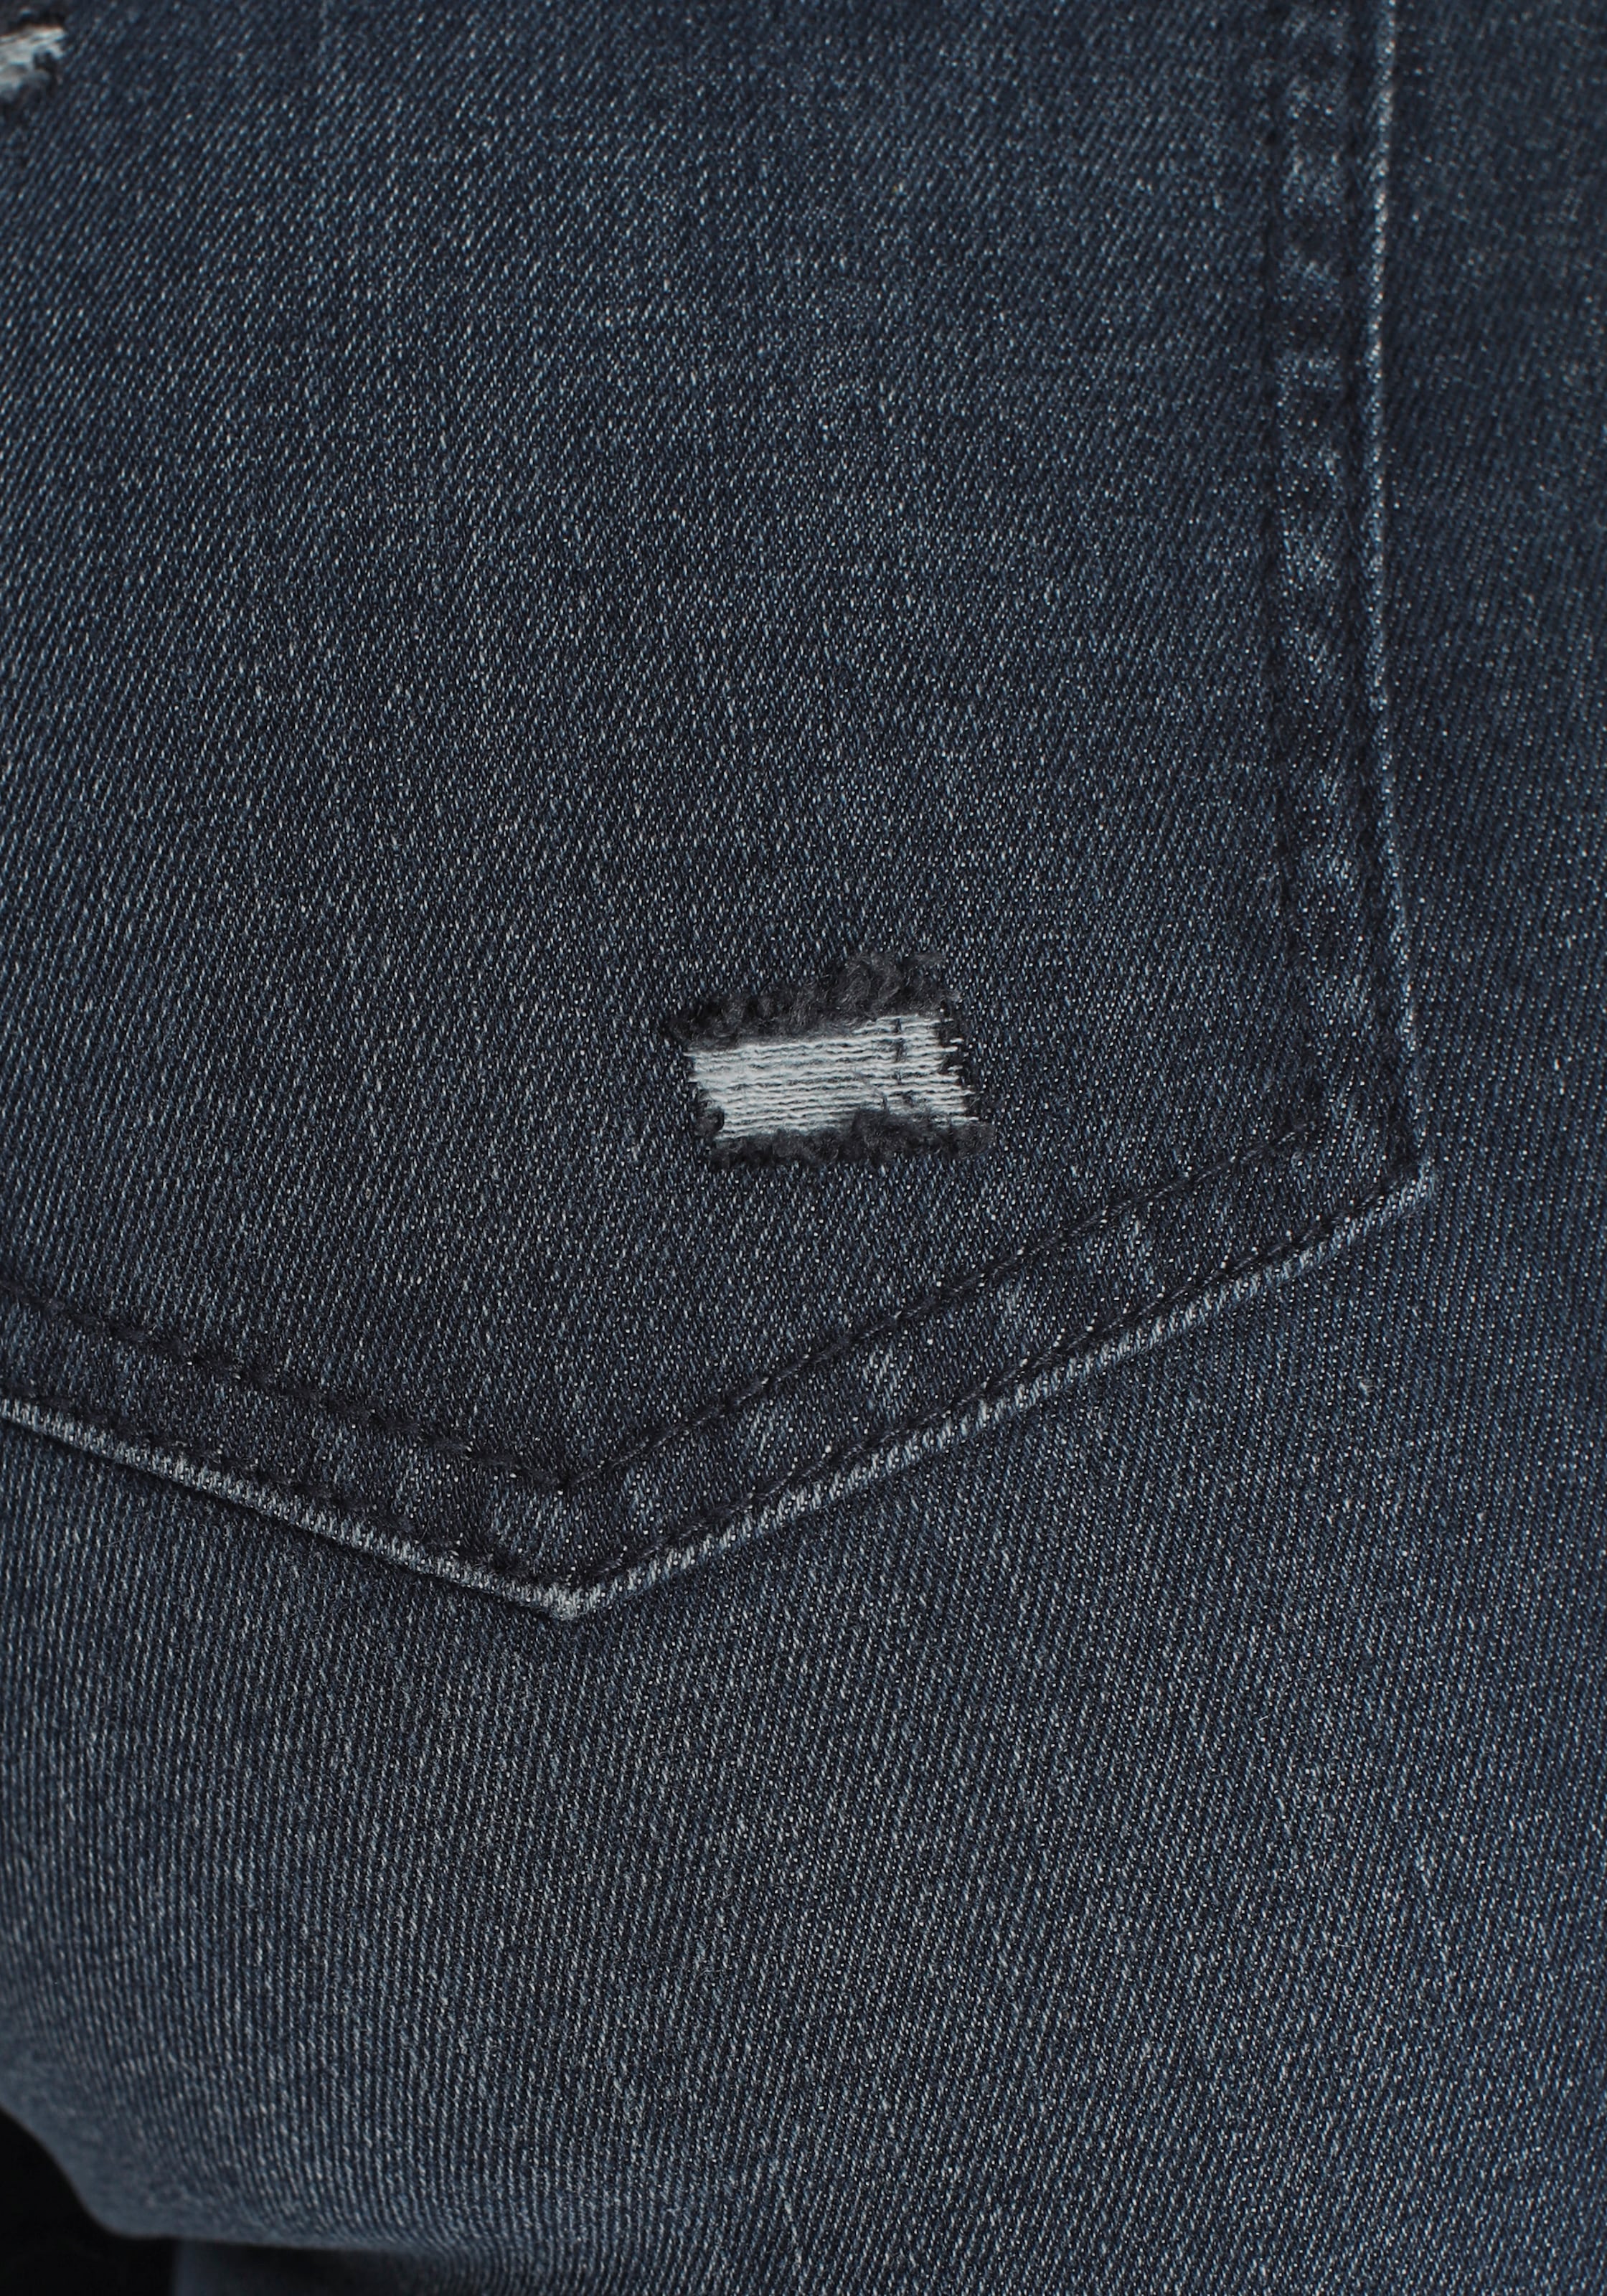 AJC 5-Pocket-Jeans, in Skninny-Fit